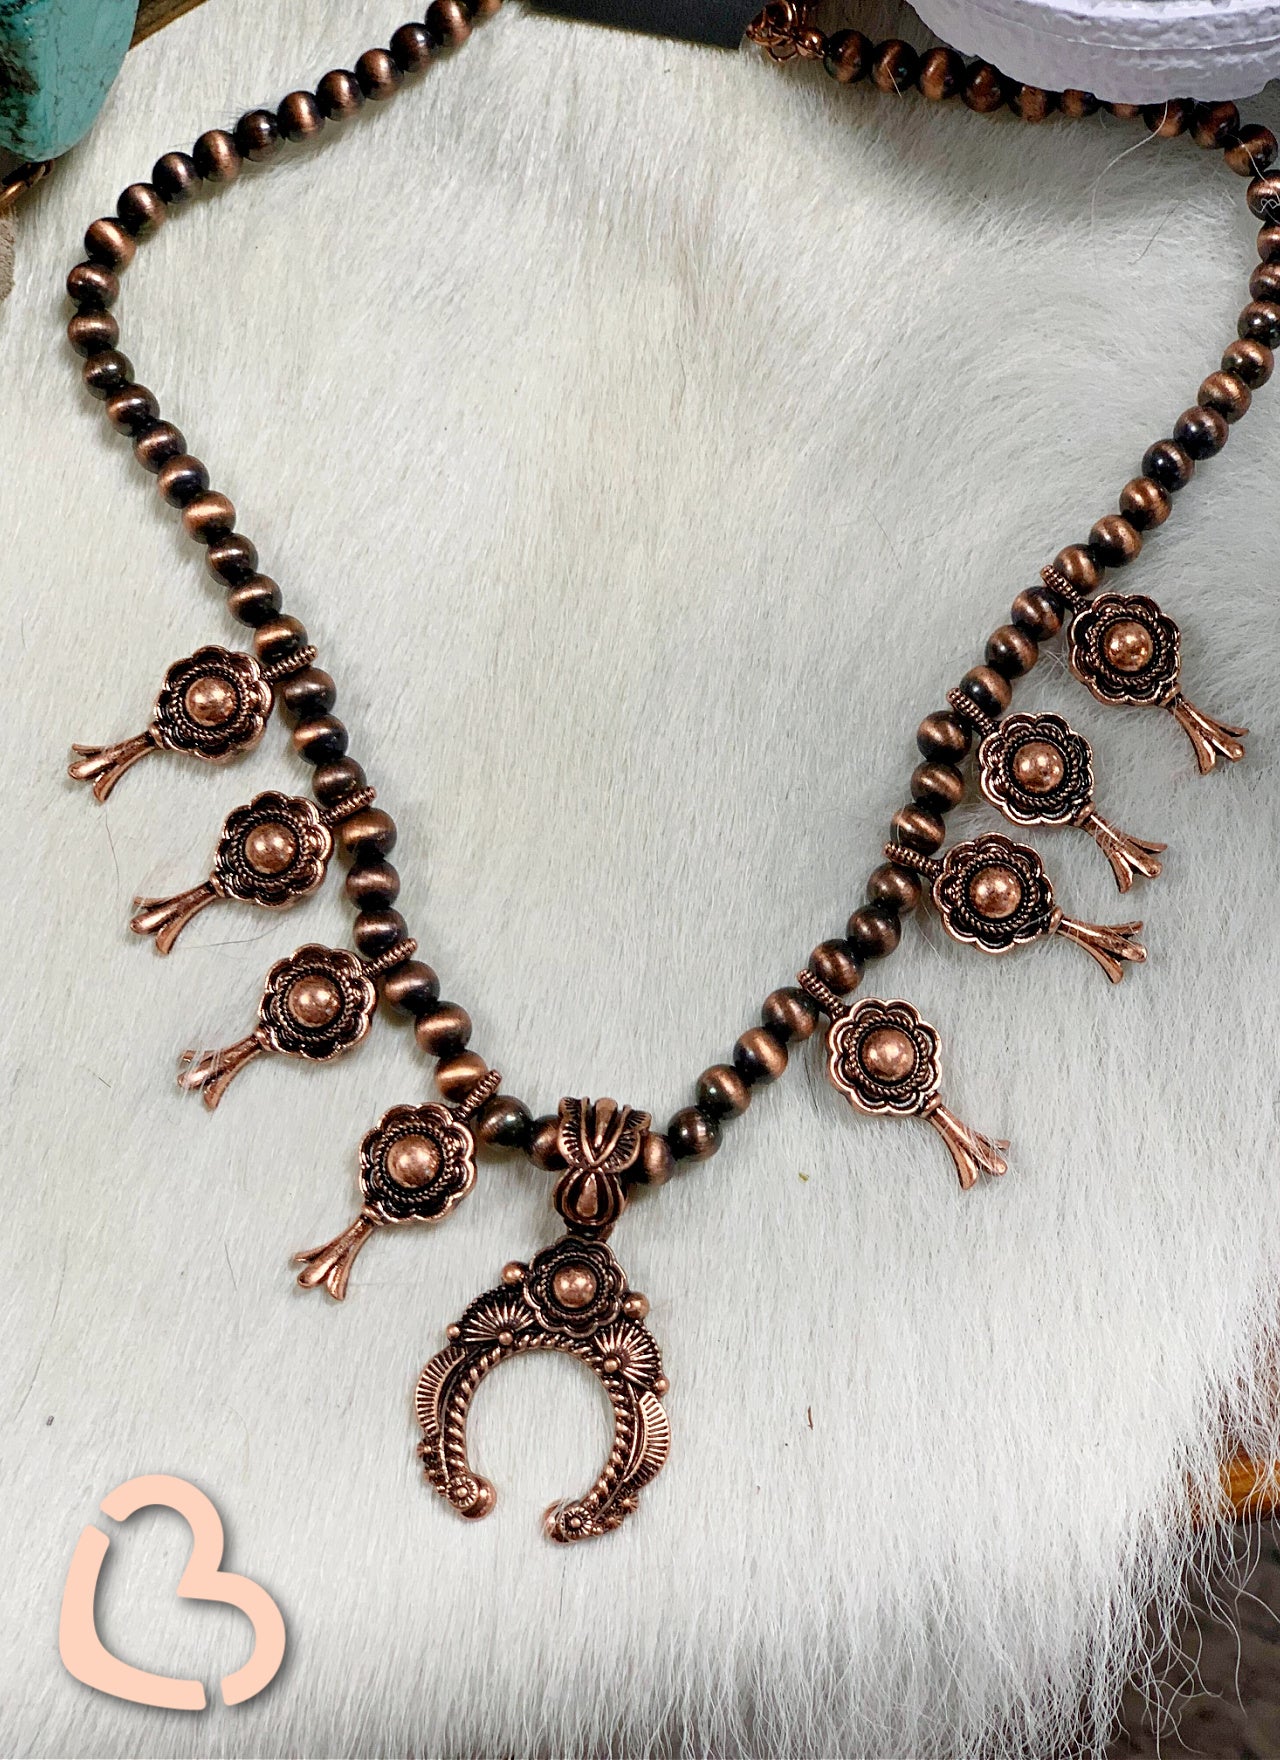 The Lenora Squash Blossom Necklace in Copper Jewelry 176 